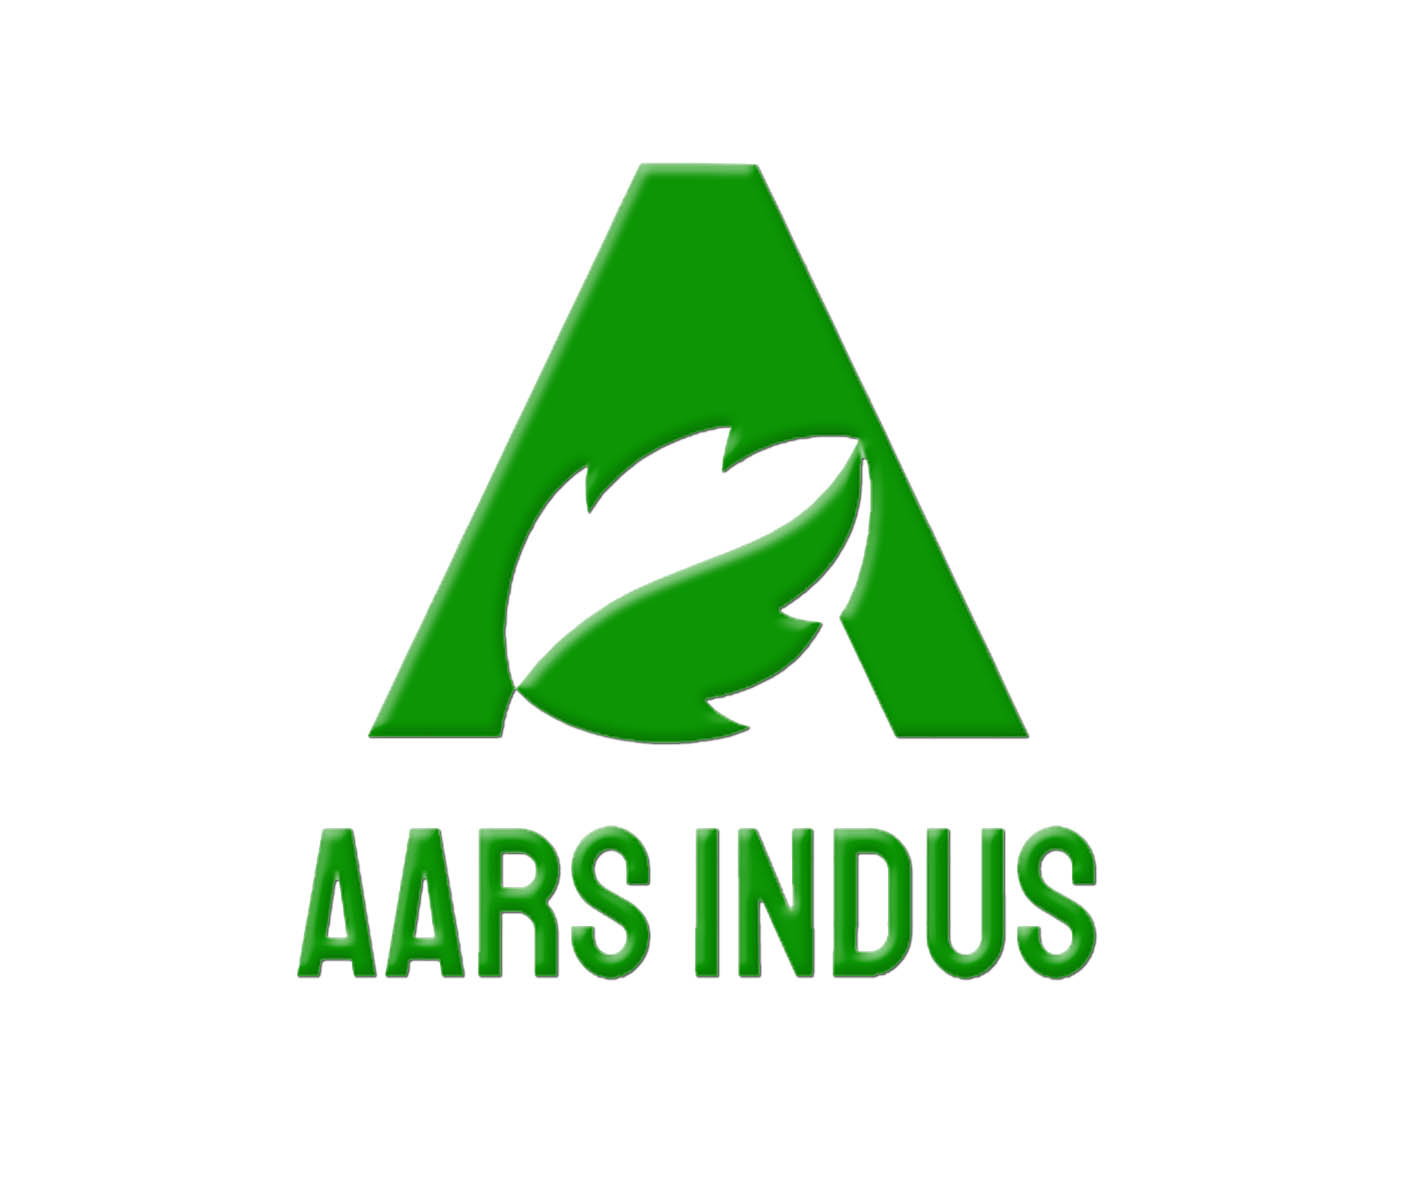 Aars Indus